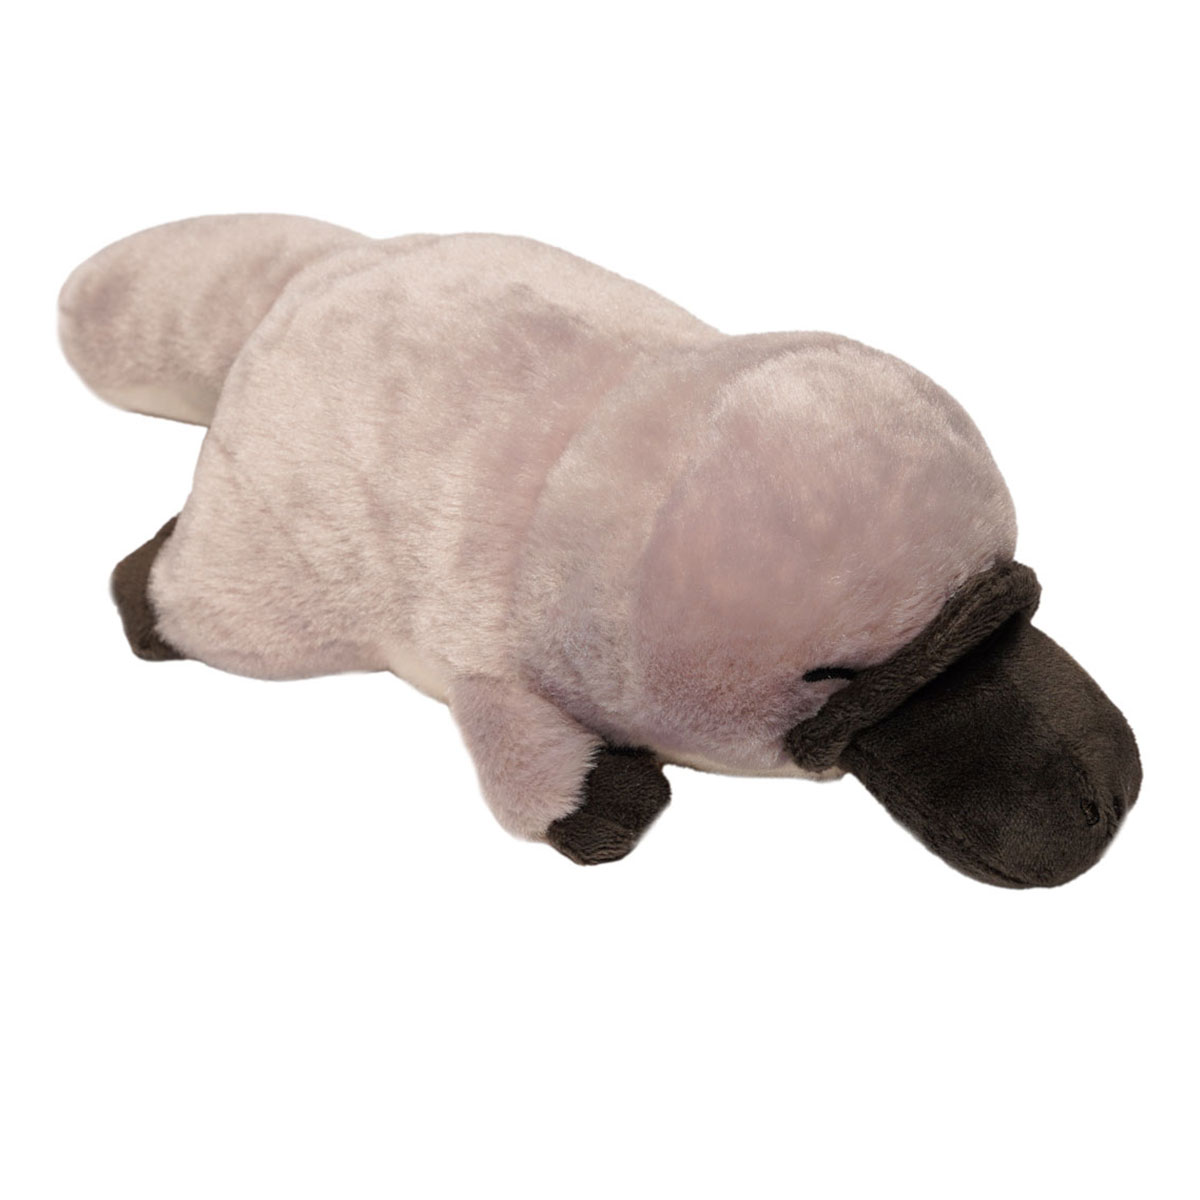 Platypus Plushie Kawaii Stuffed Animal Toy Grey Standard Size 11 Inches